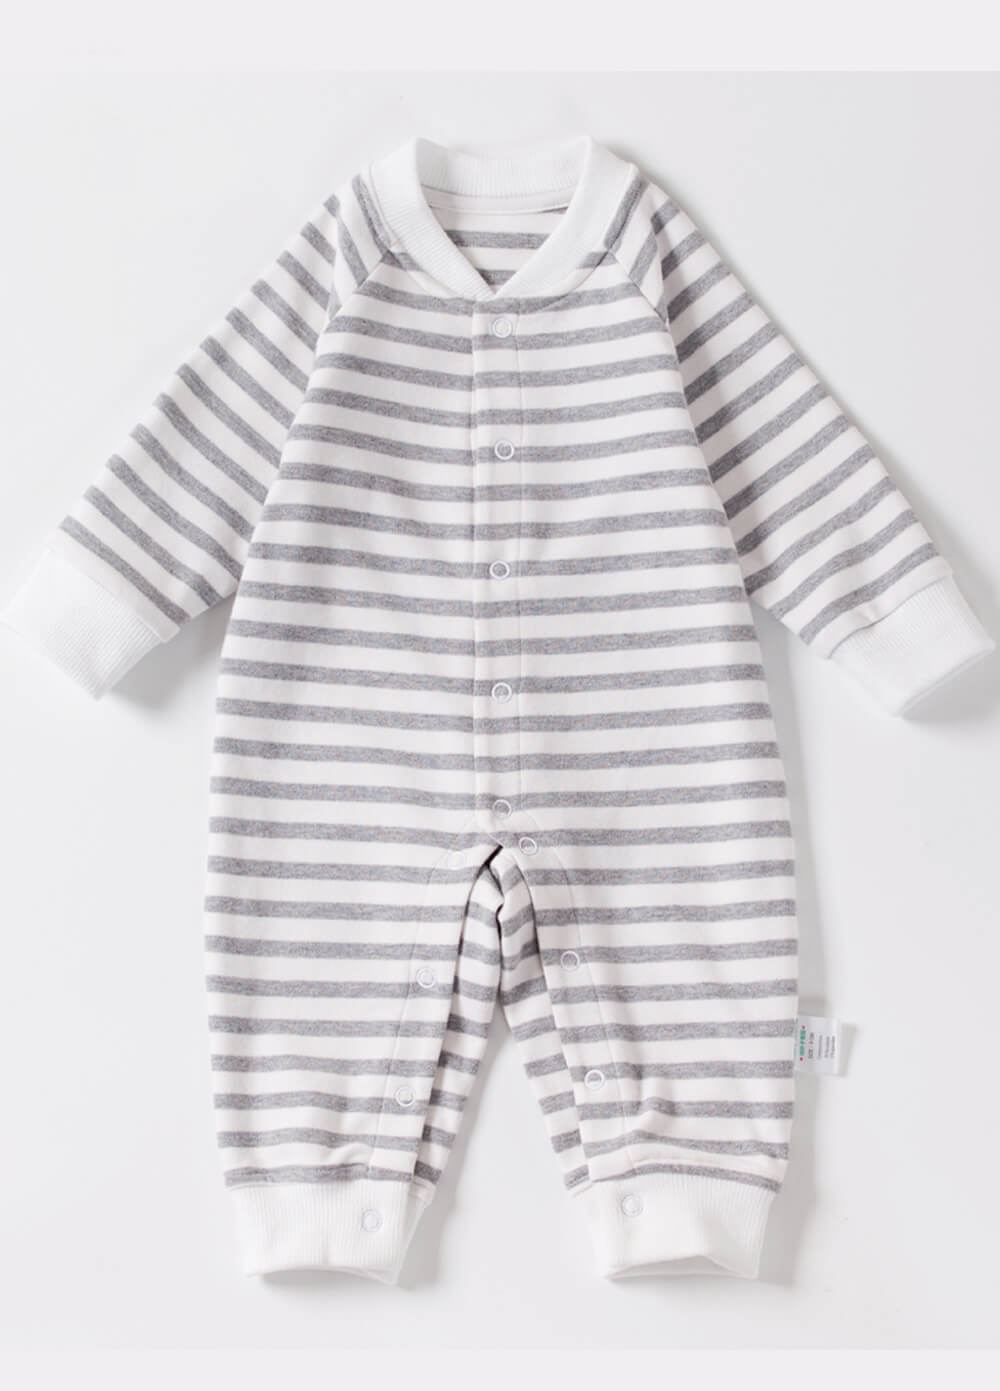 Queen Bee Lille Newborn Baby Onesie in Grey Stripes from Lait & Co